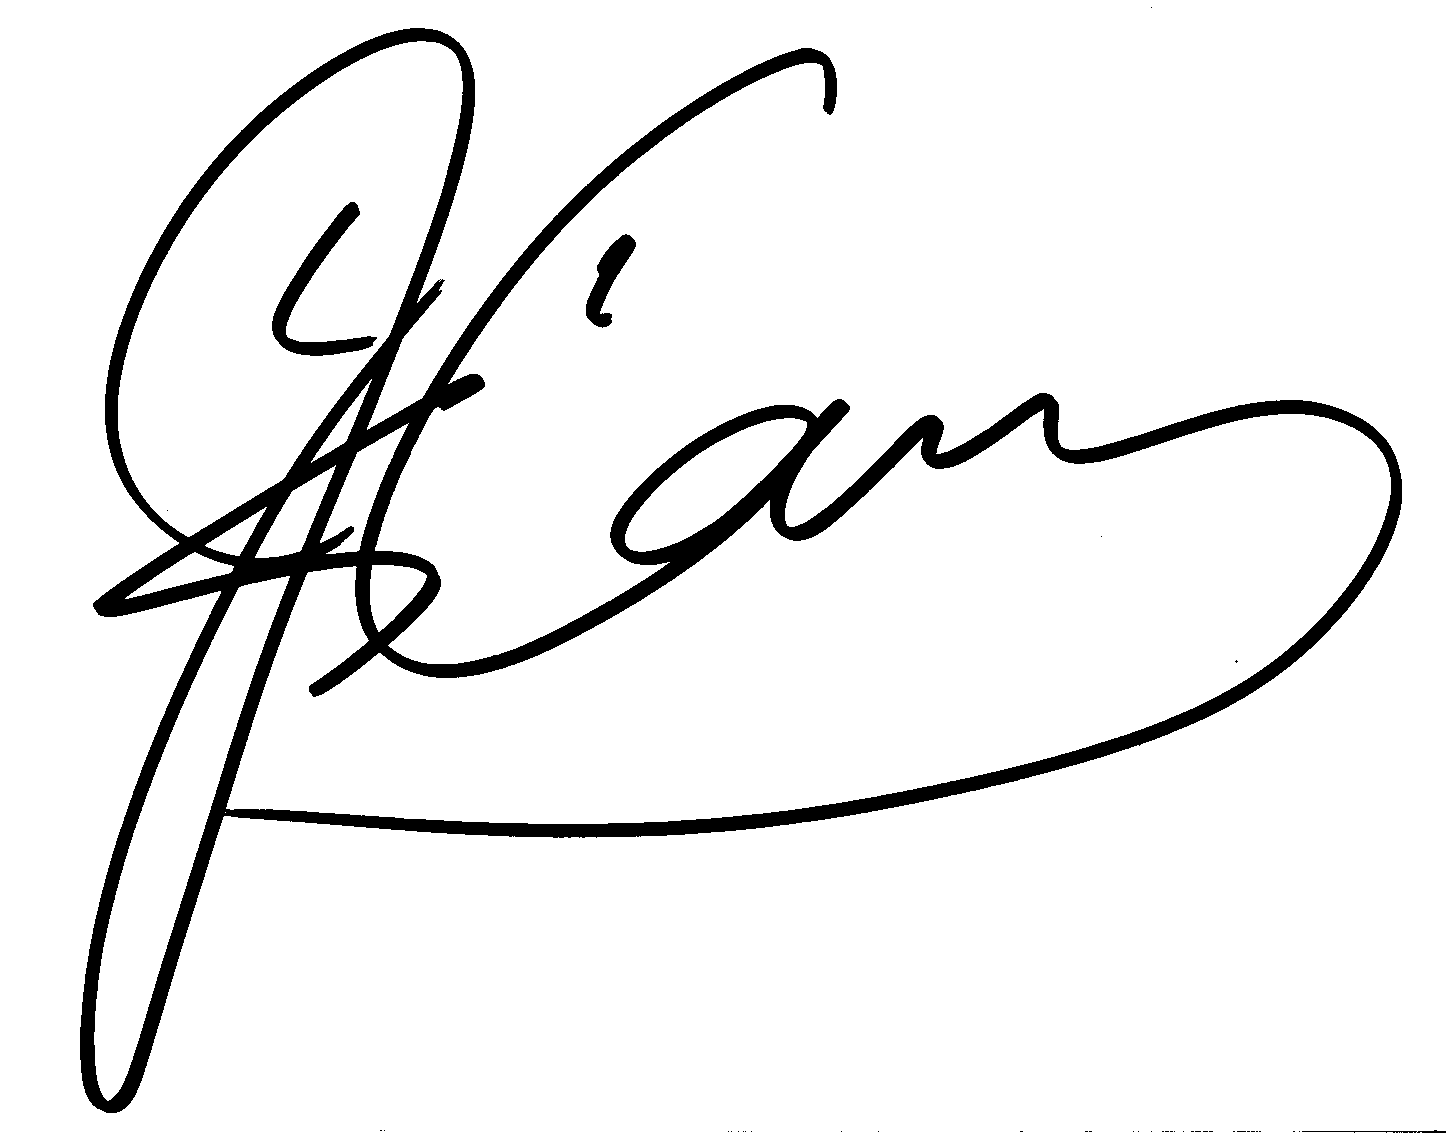 Jim Carrey autograph facsimile